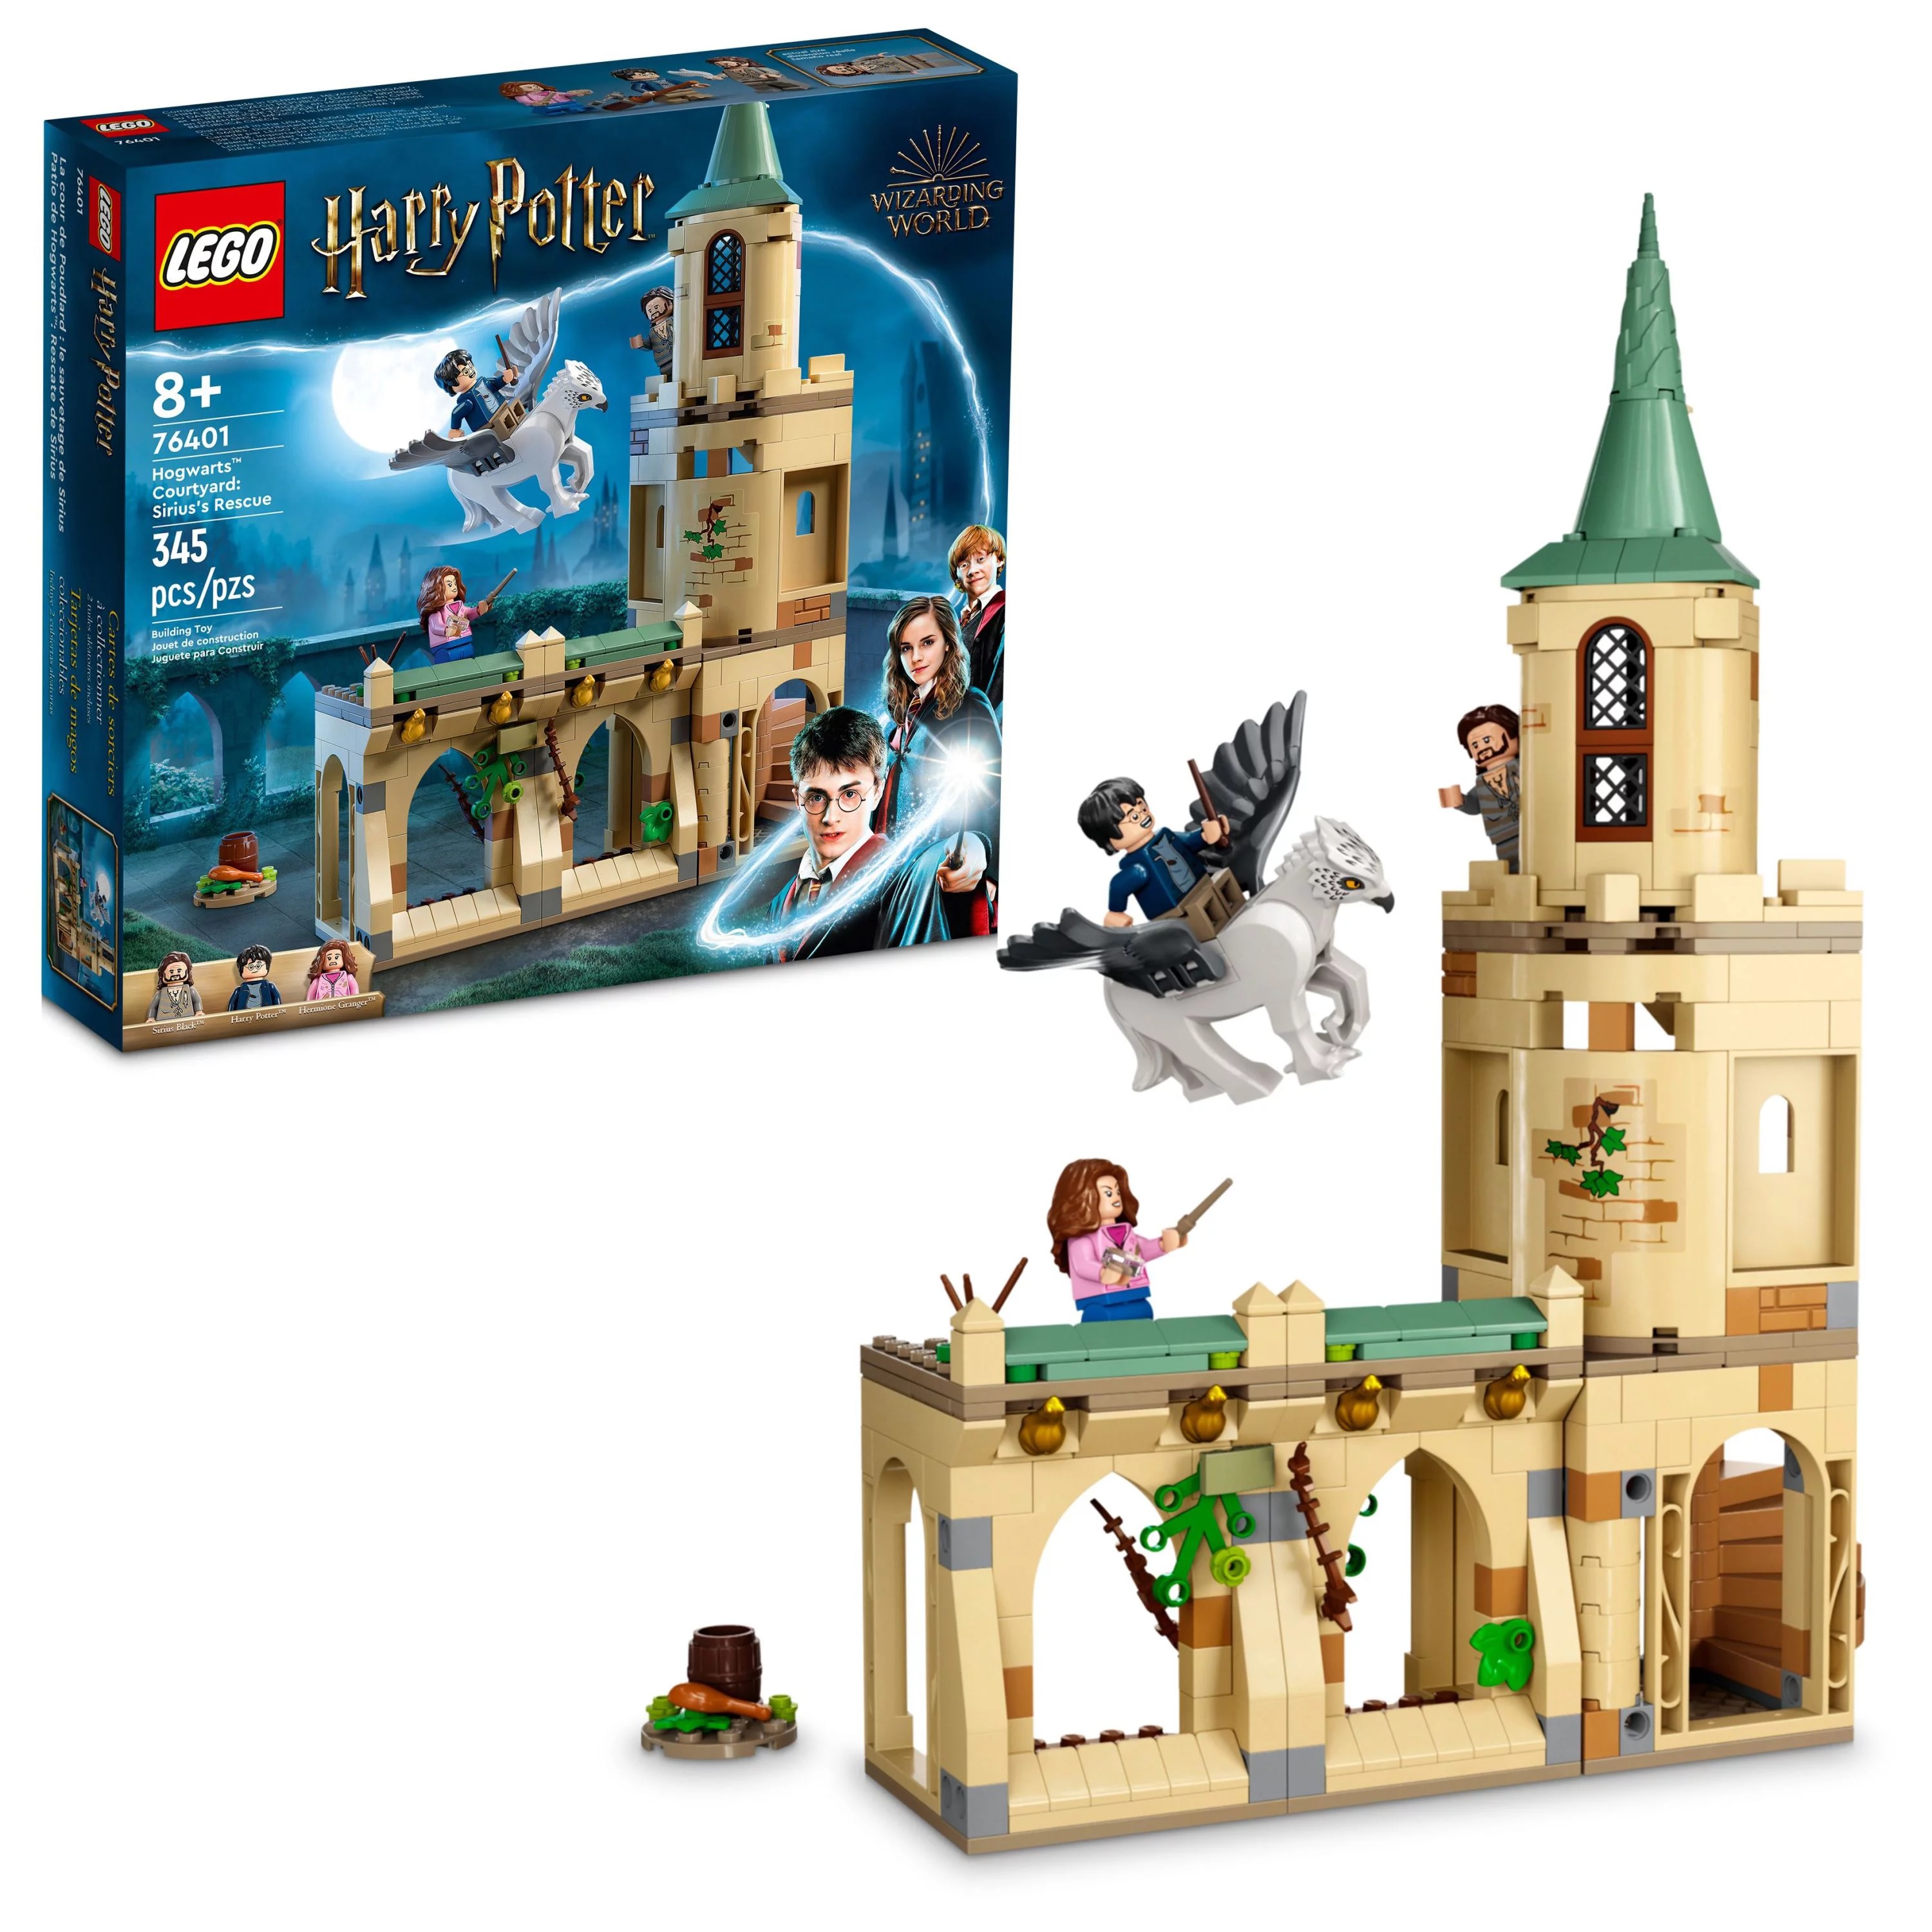 Patio de Lego Harry Potter 